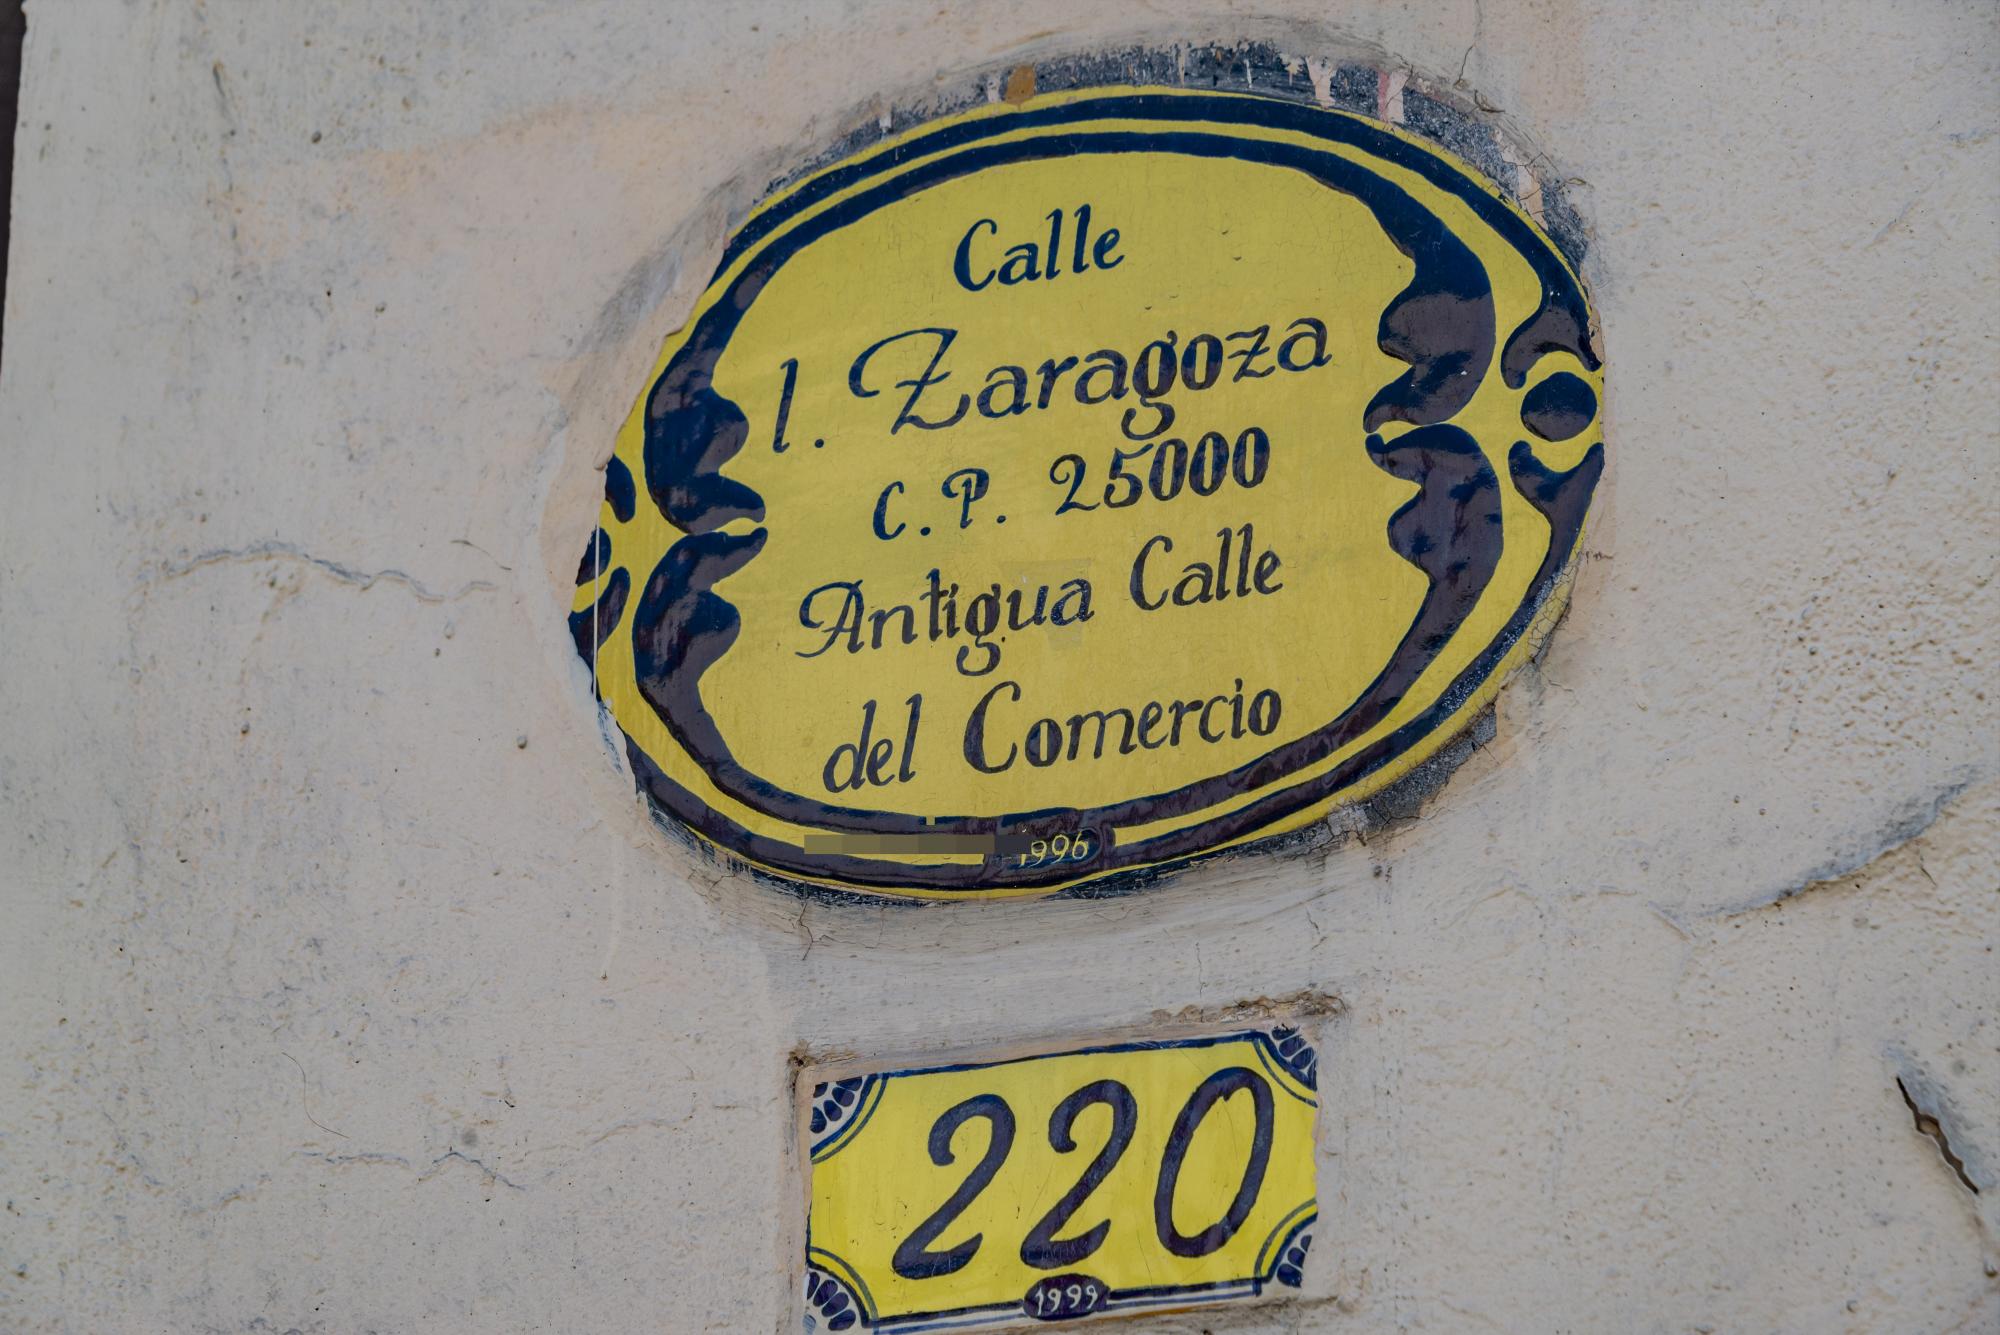 $!Nomenclatura del antiguo nombre de la calle Zaragoza.